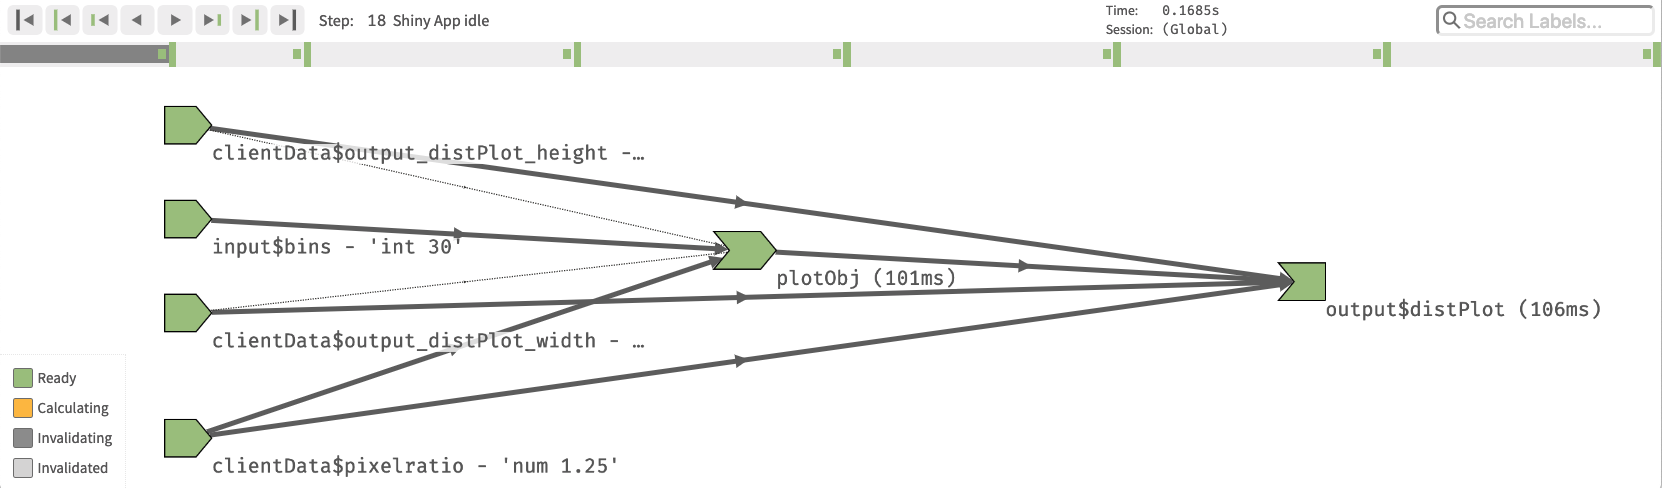 Shiny reactive log diagram